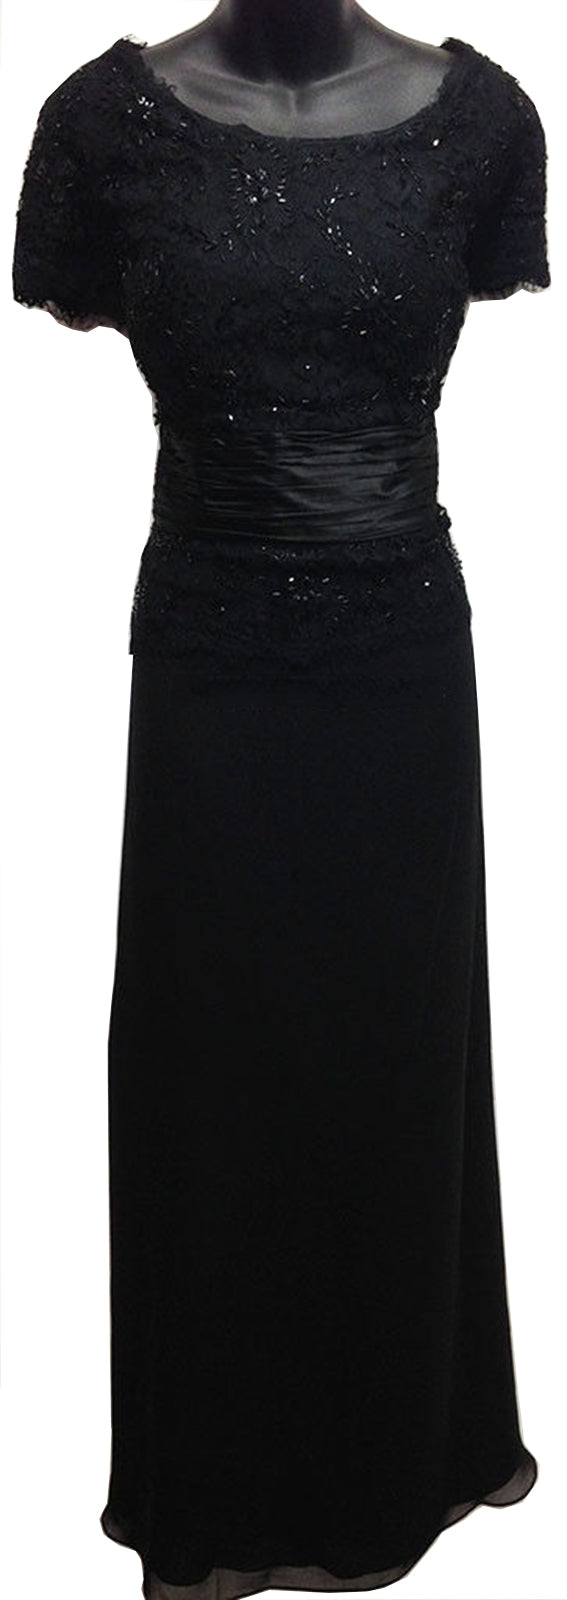 Short Sleeve Sequins Chiffon Dress-LA571 - BLACK - Dresses LA Merchandise